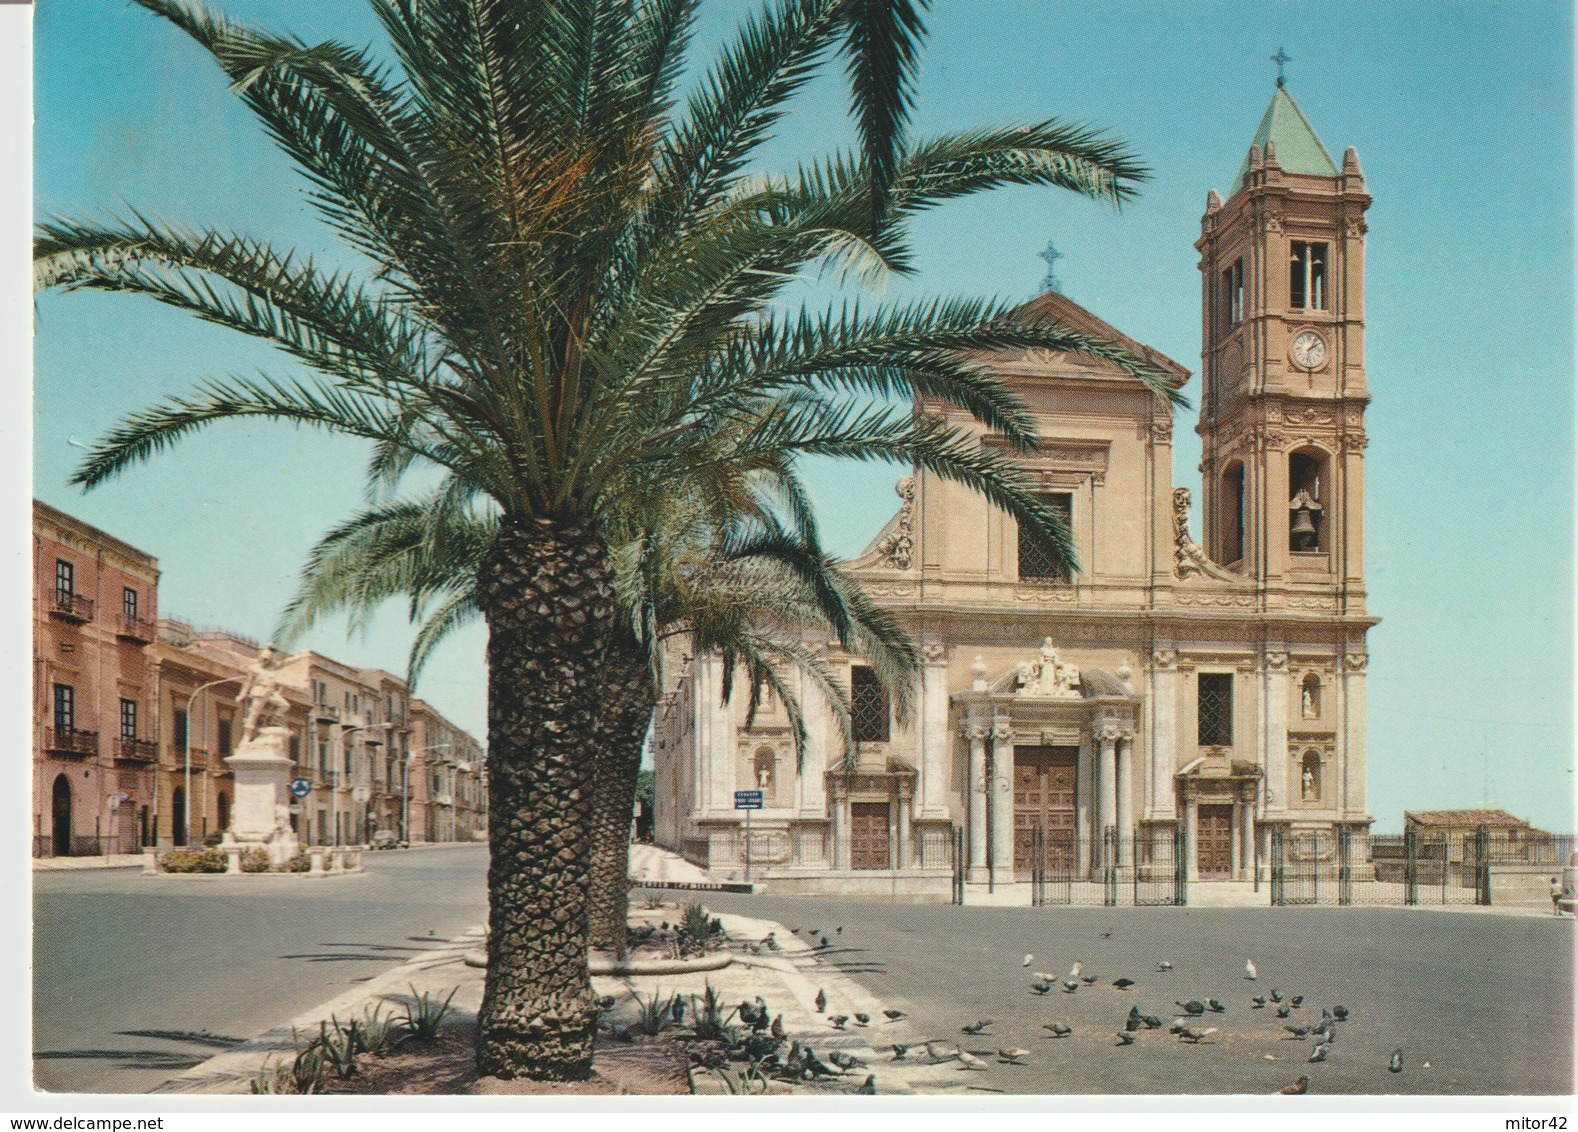 106-Termini Imerese-Piazza Duomo-Chiesa-Botanica:Palme-v.1972 X Aci S. Antonio-Catania - Palermo